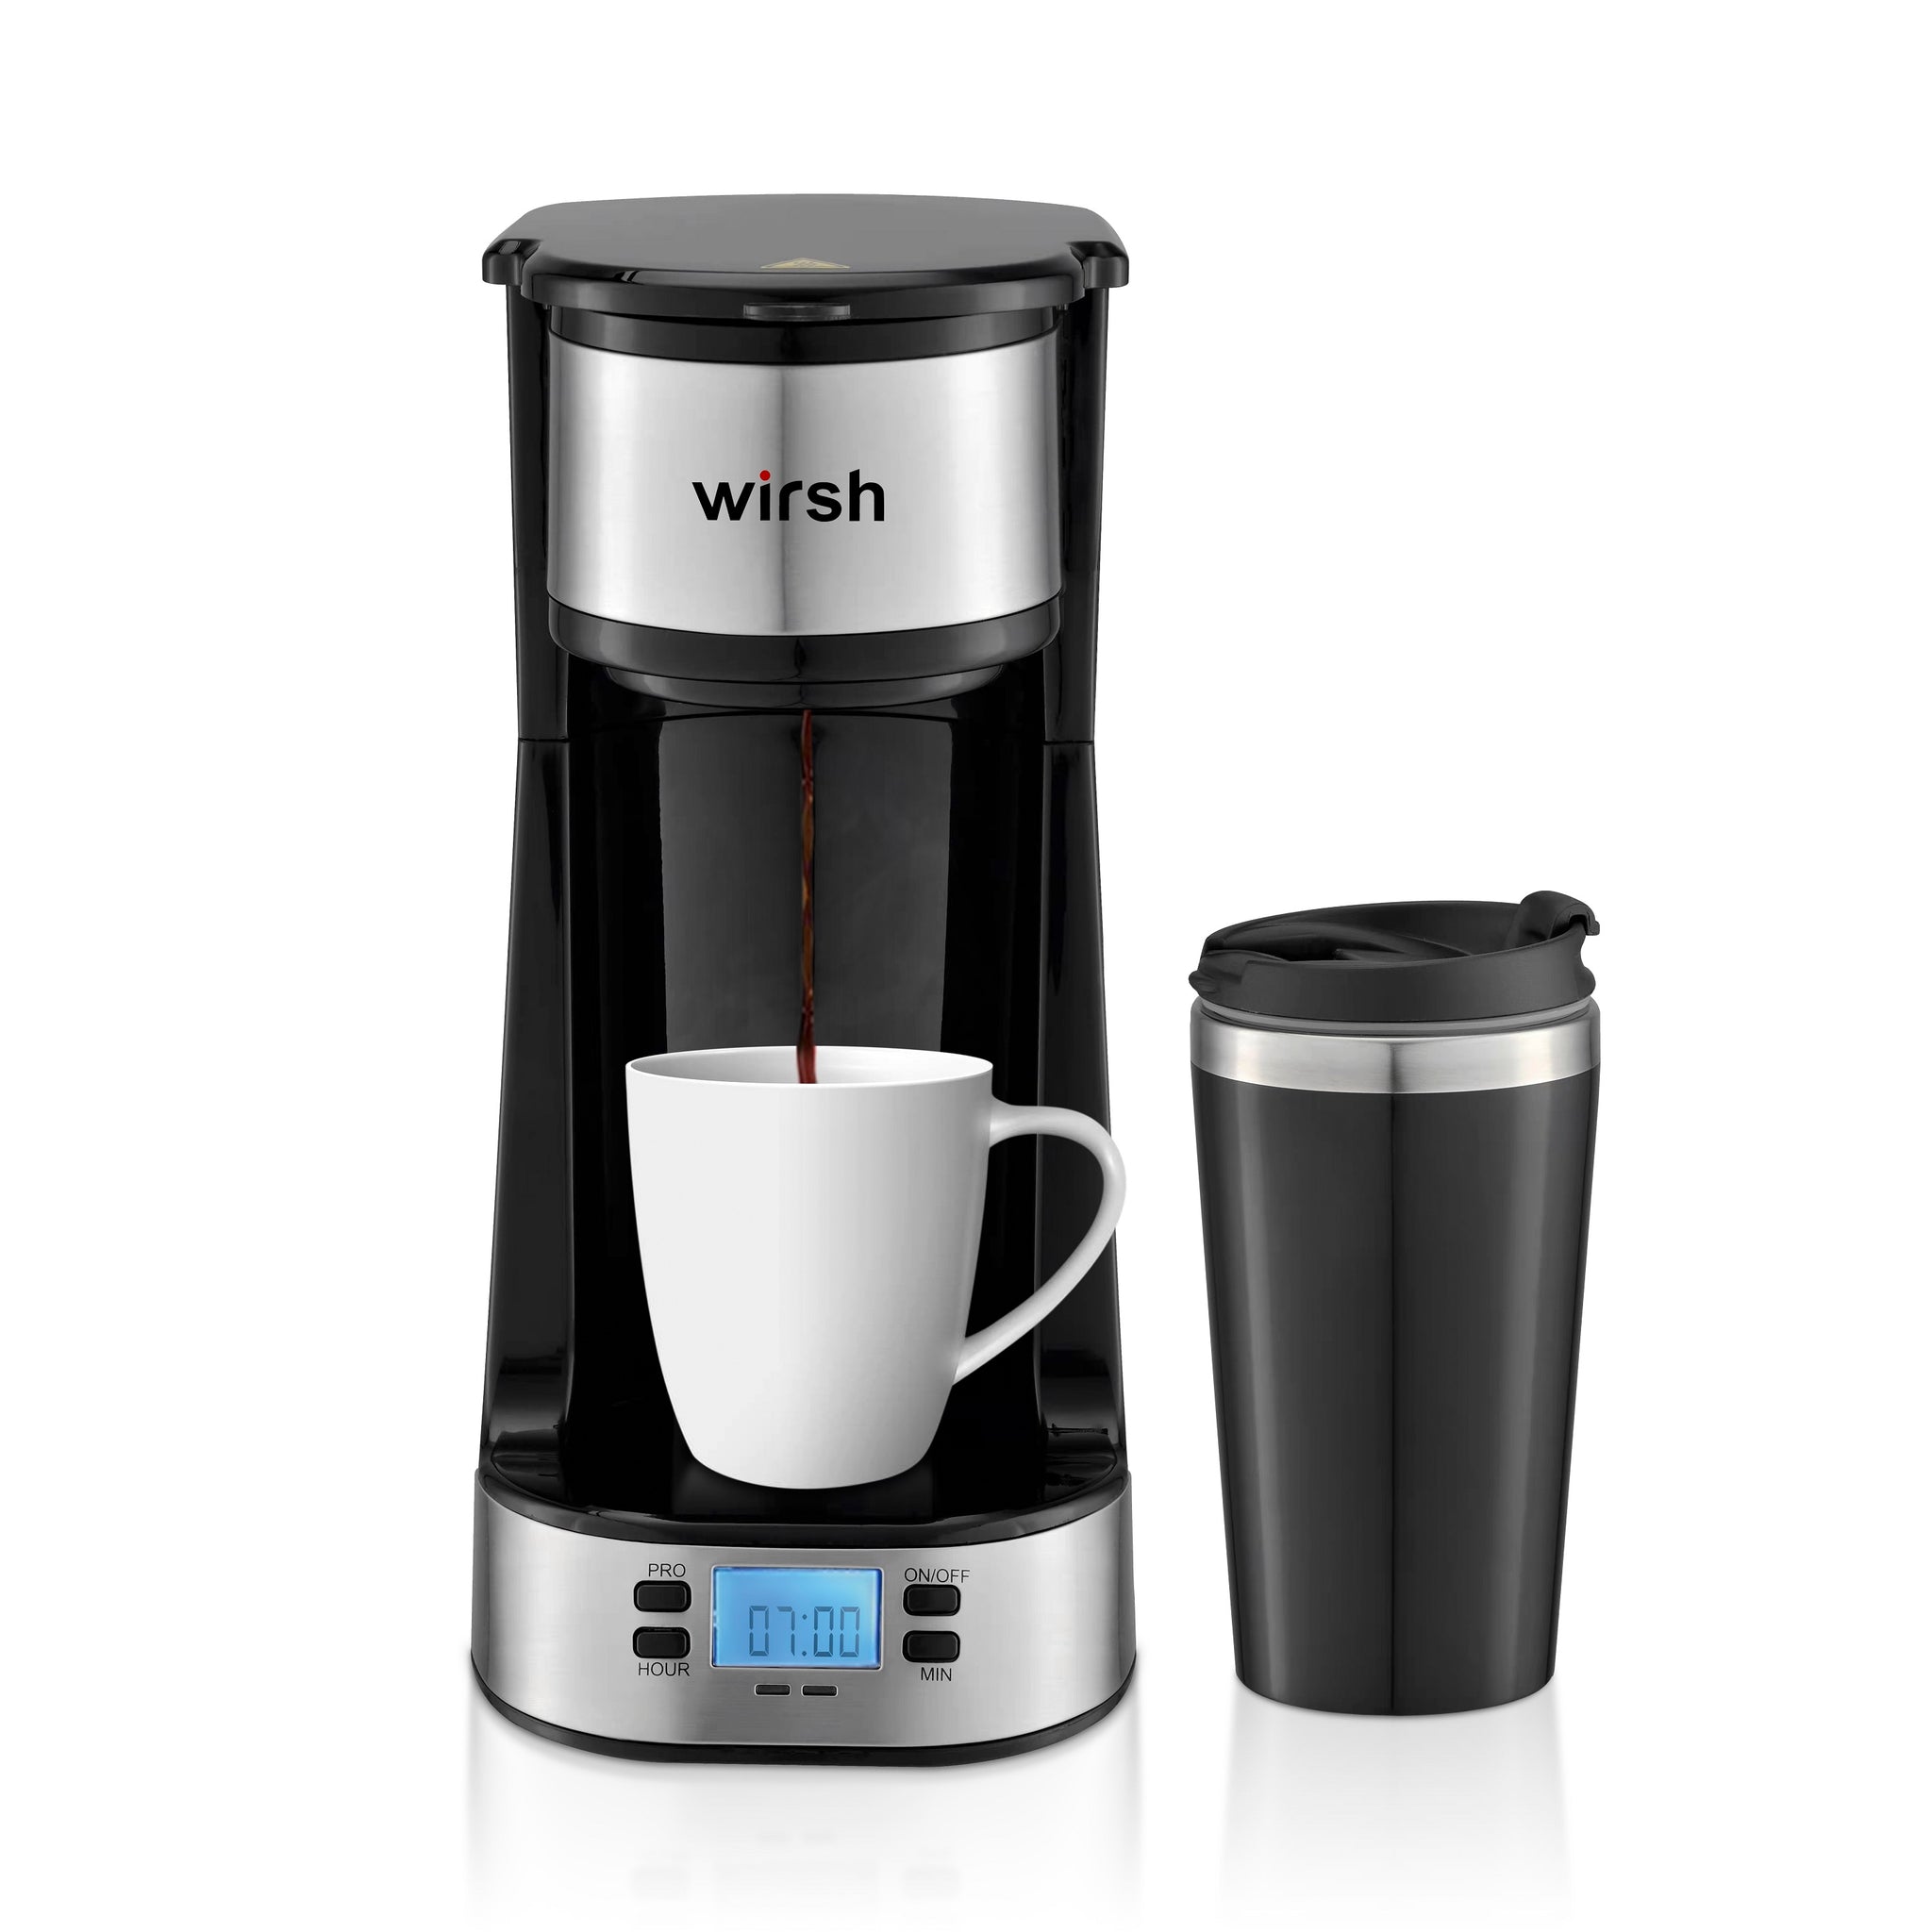 <img src="single serve coffee maker.jpg" alt="wirsh coffee maker with travel mug"/>